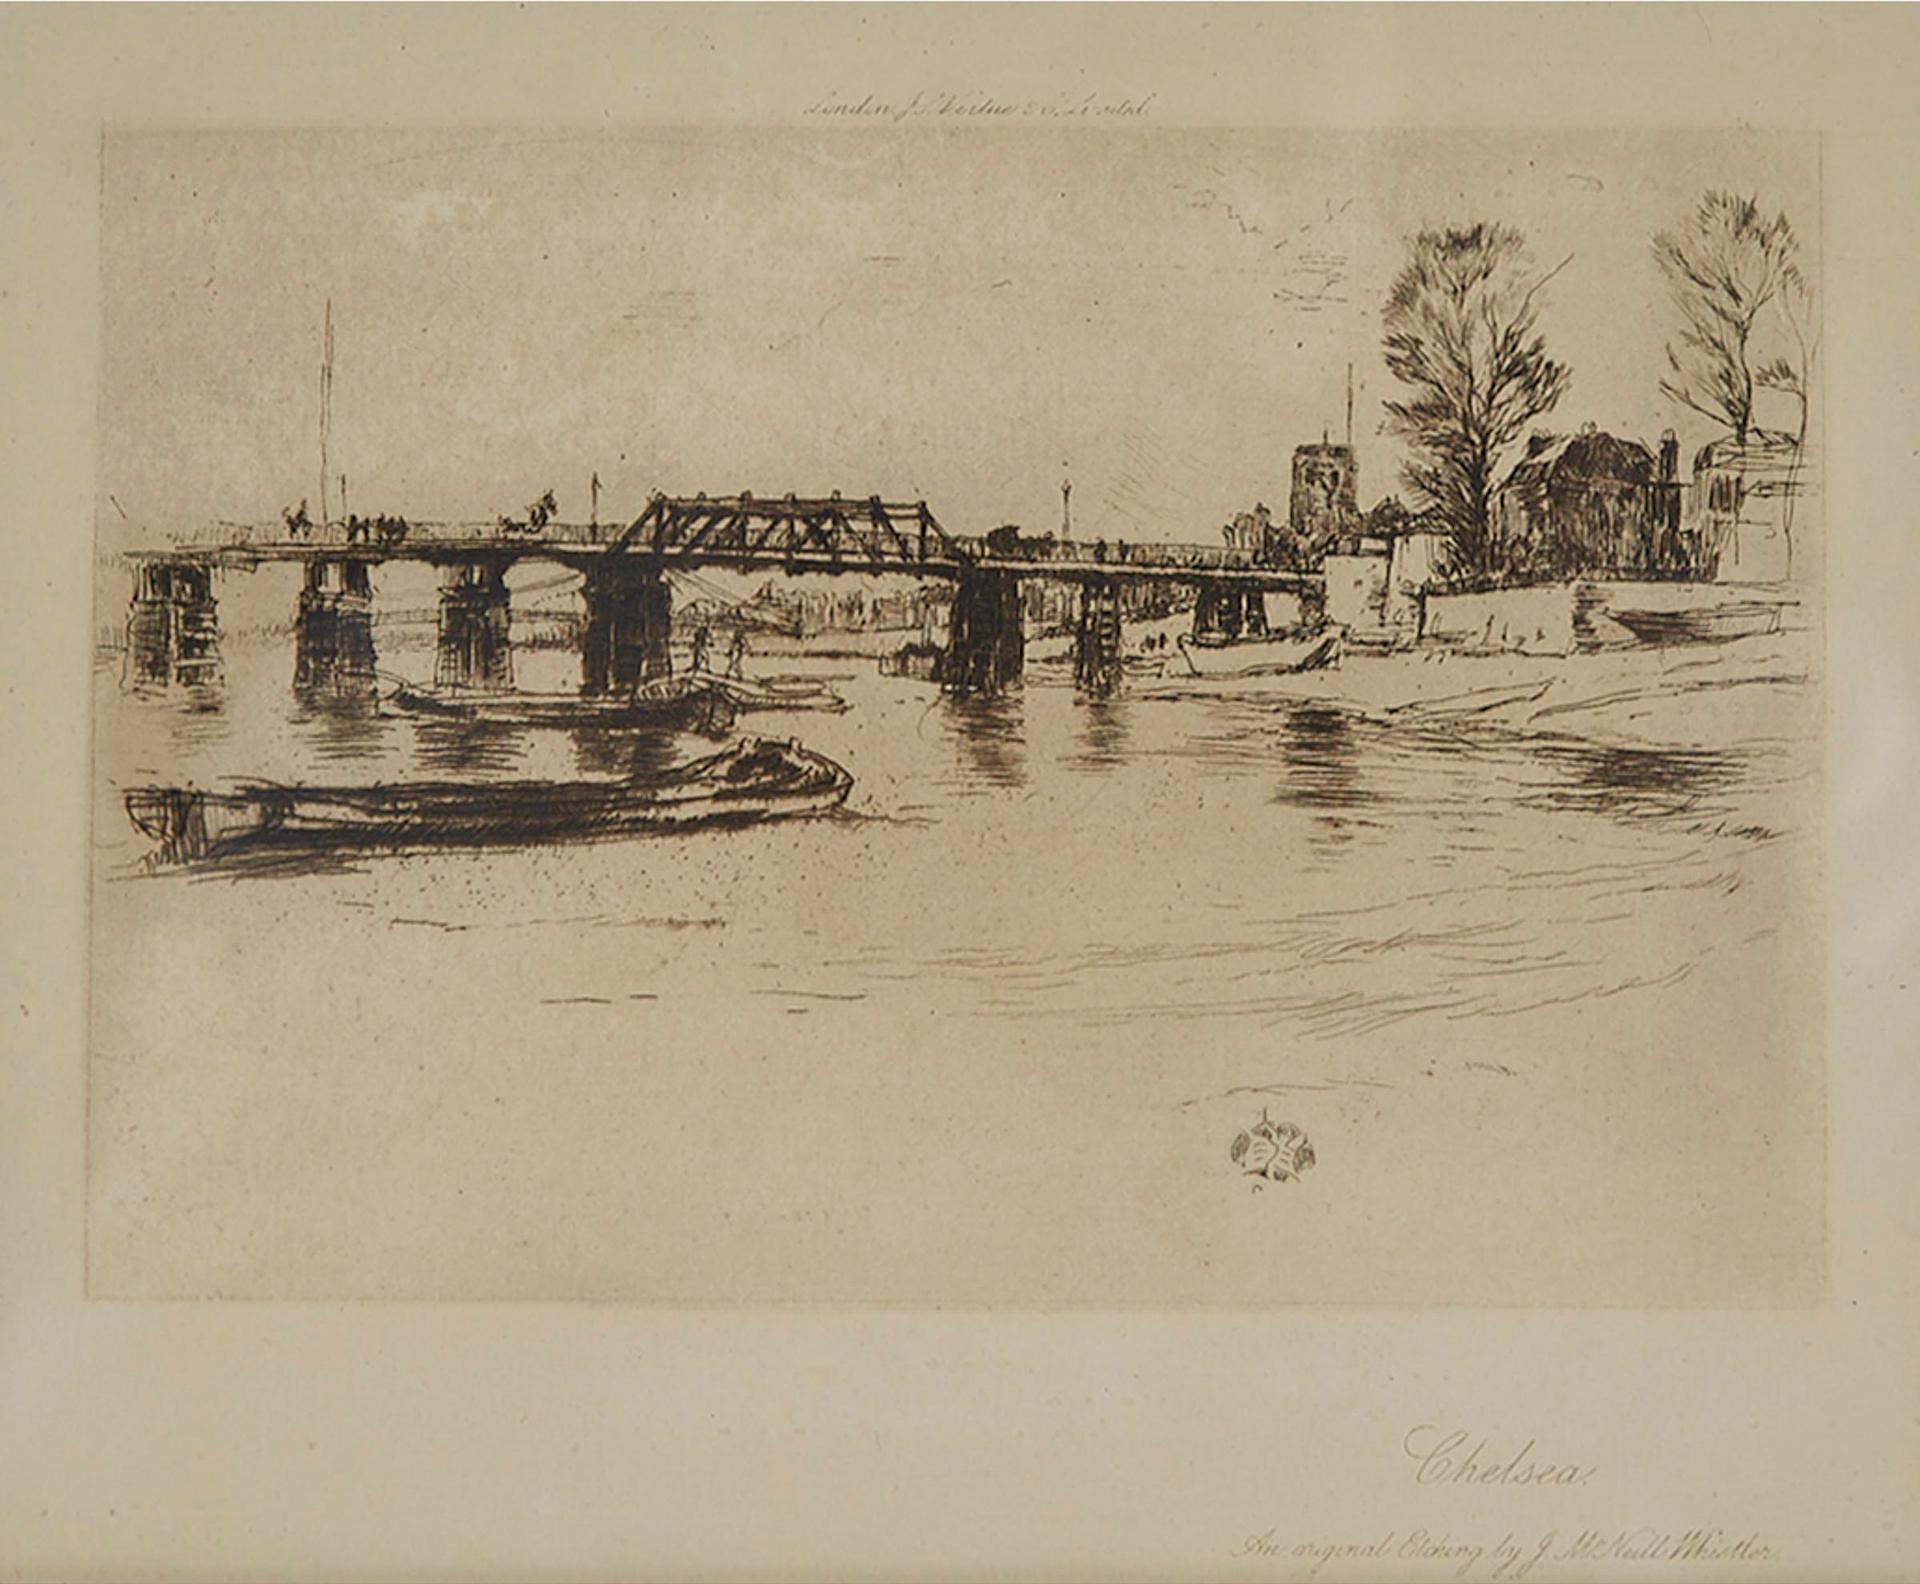 James Abbott McNeill Whistler (1834-1903) - Chelsea, Circa 1885 [glasgow, 181]